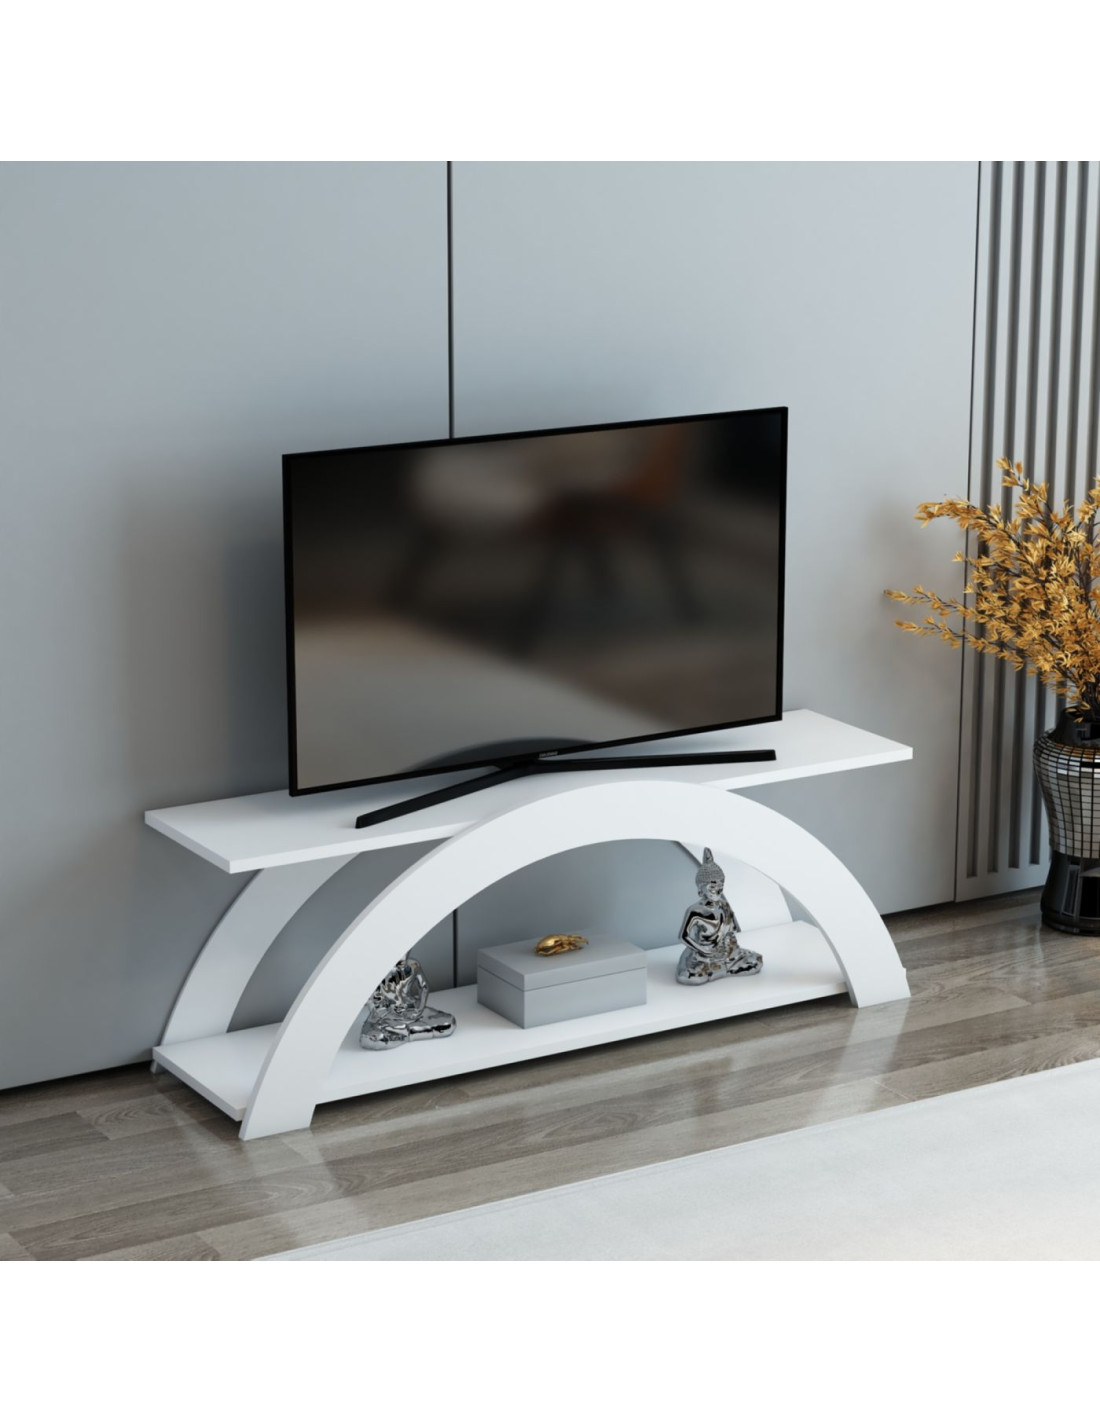 https://images2.cielterre-commerce.fr/48163-thickbox_default/meuble-tv-blanc-design-meuble-television-moderne-meuble-tele-tendance.jpg